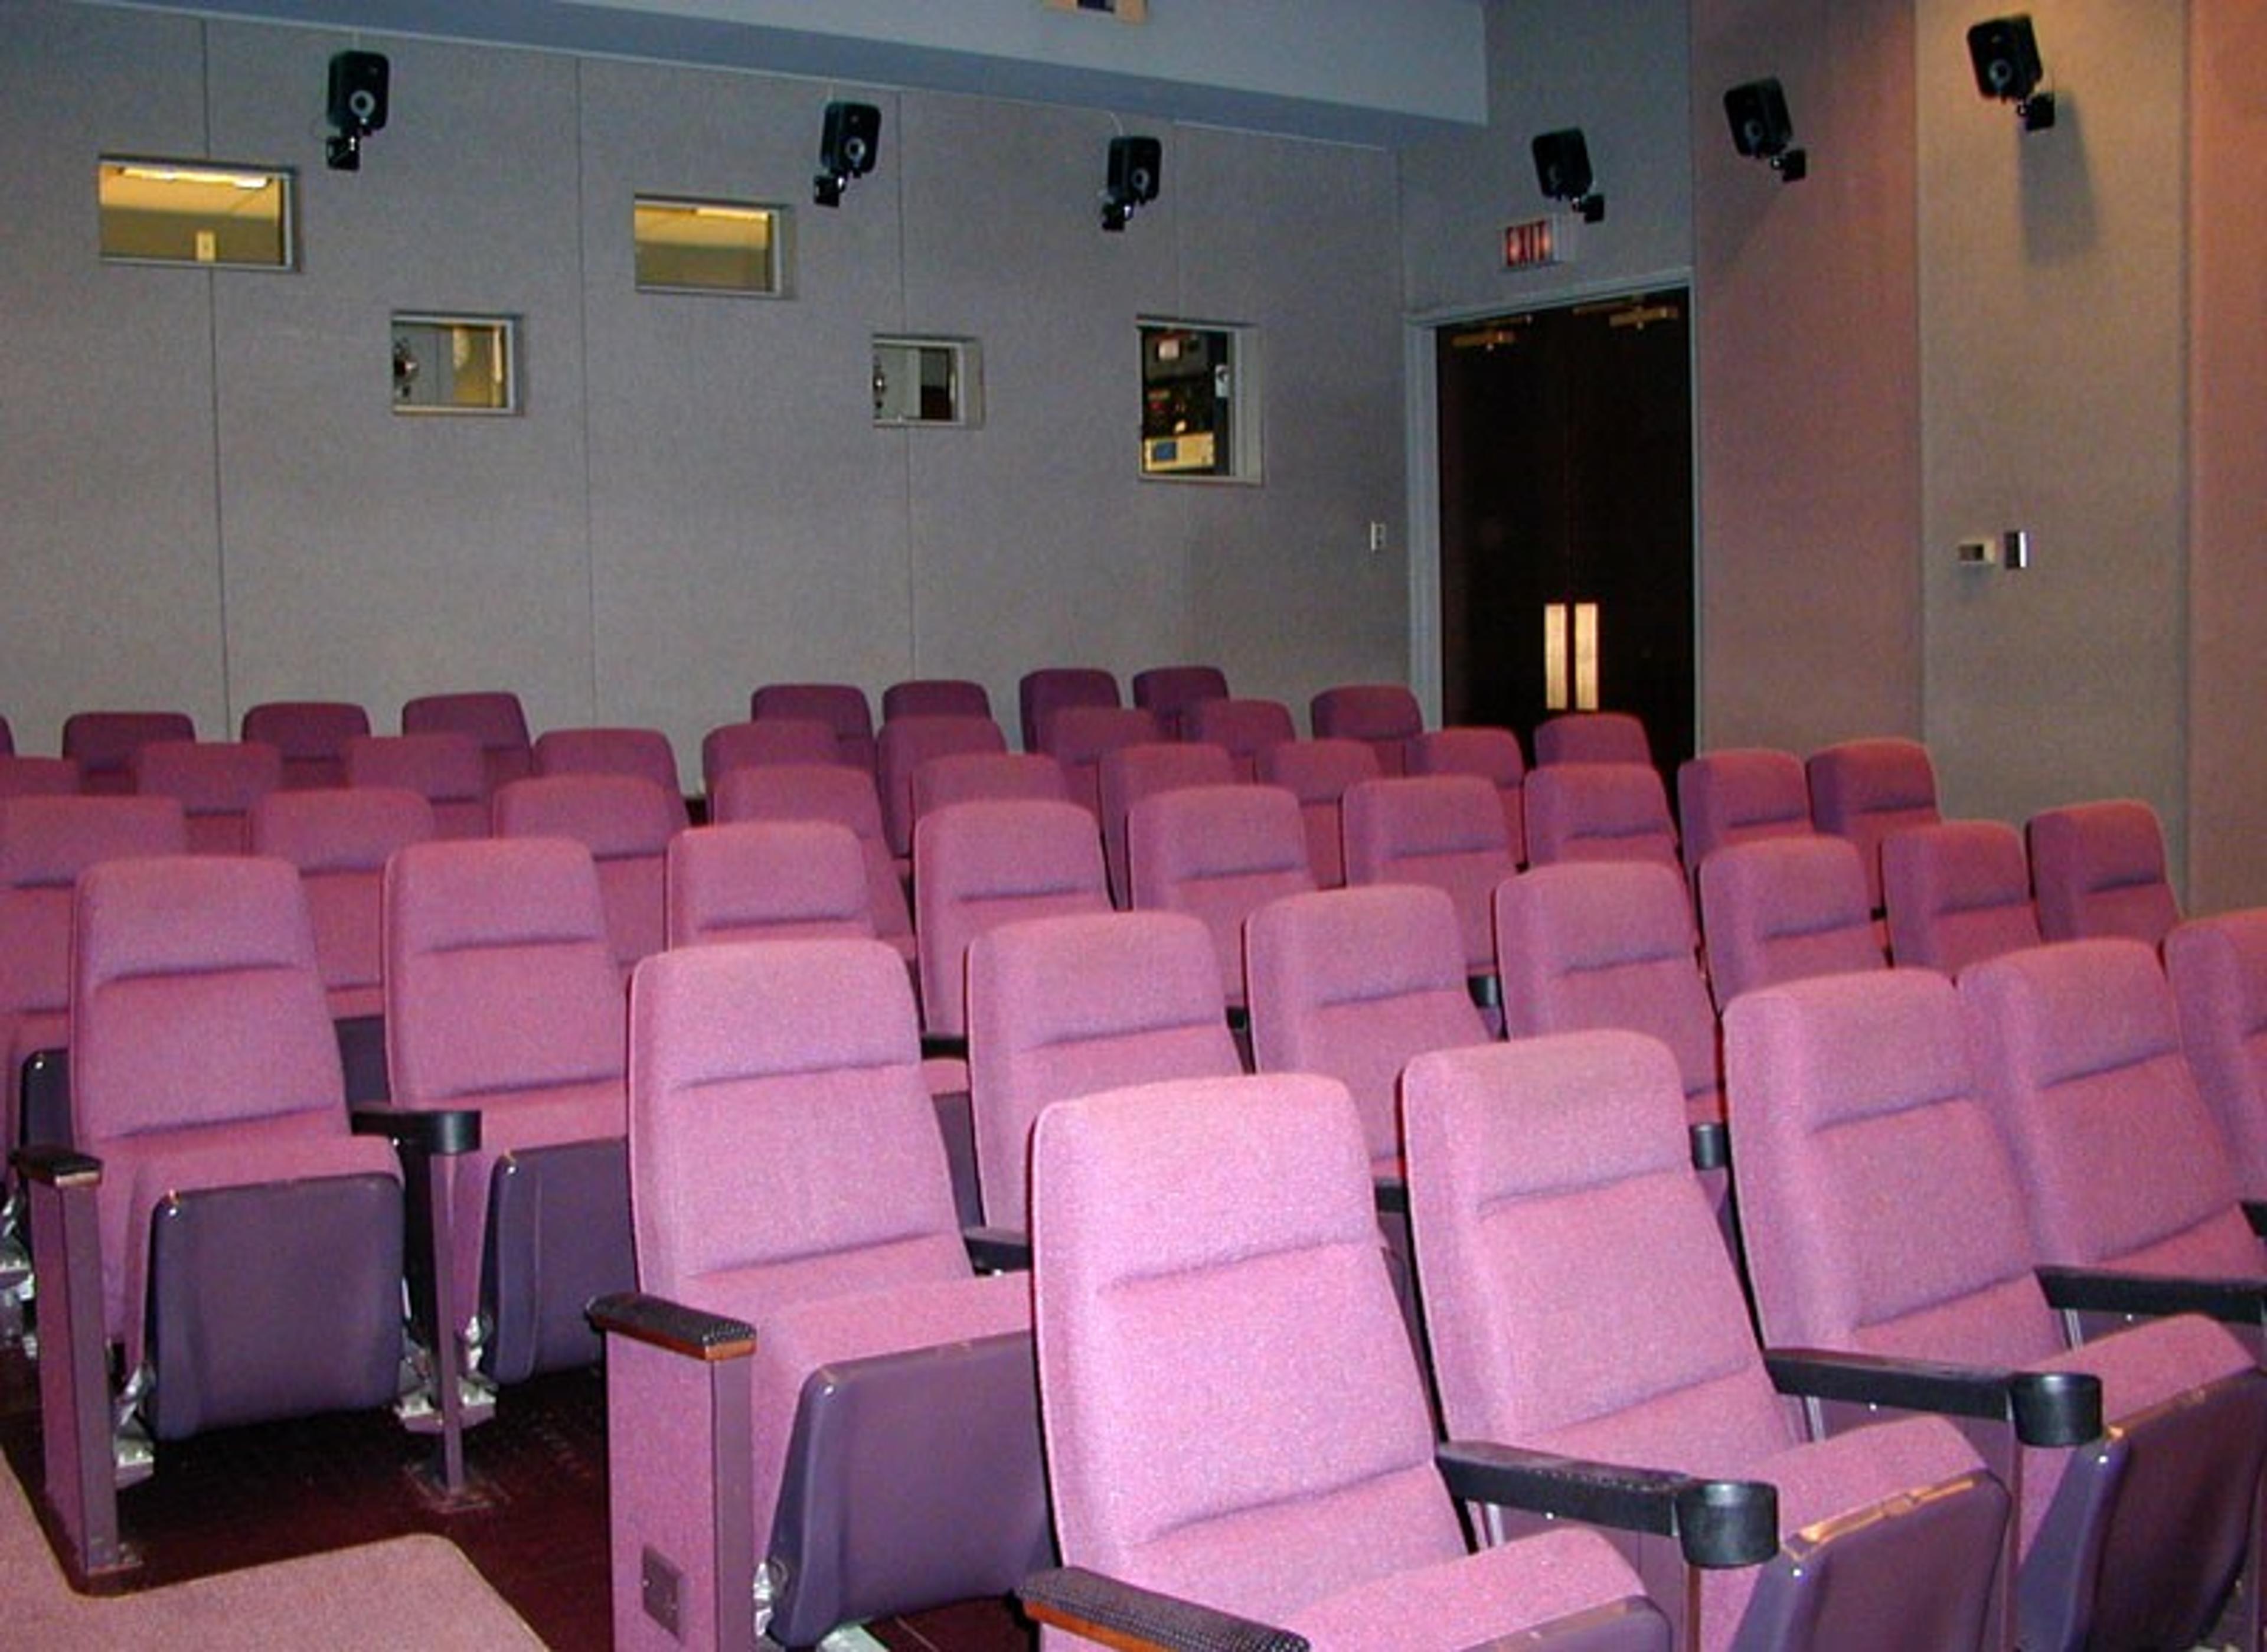 The Lake Street Screening Room